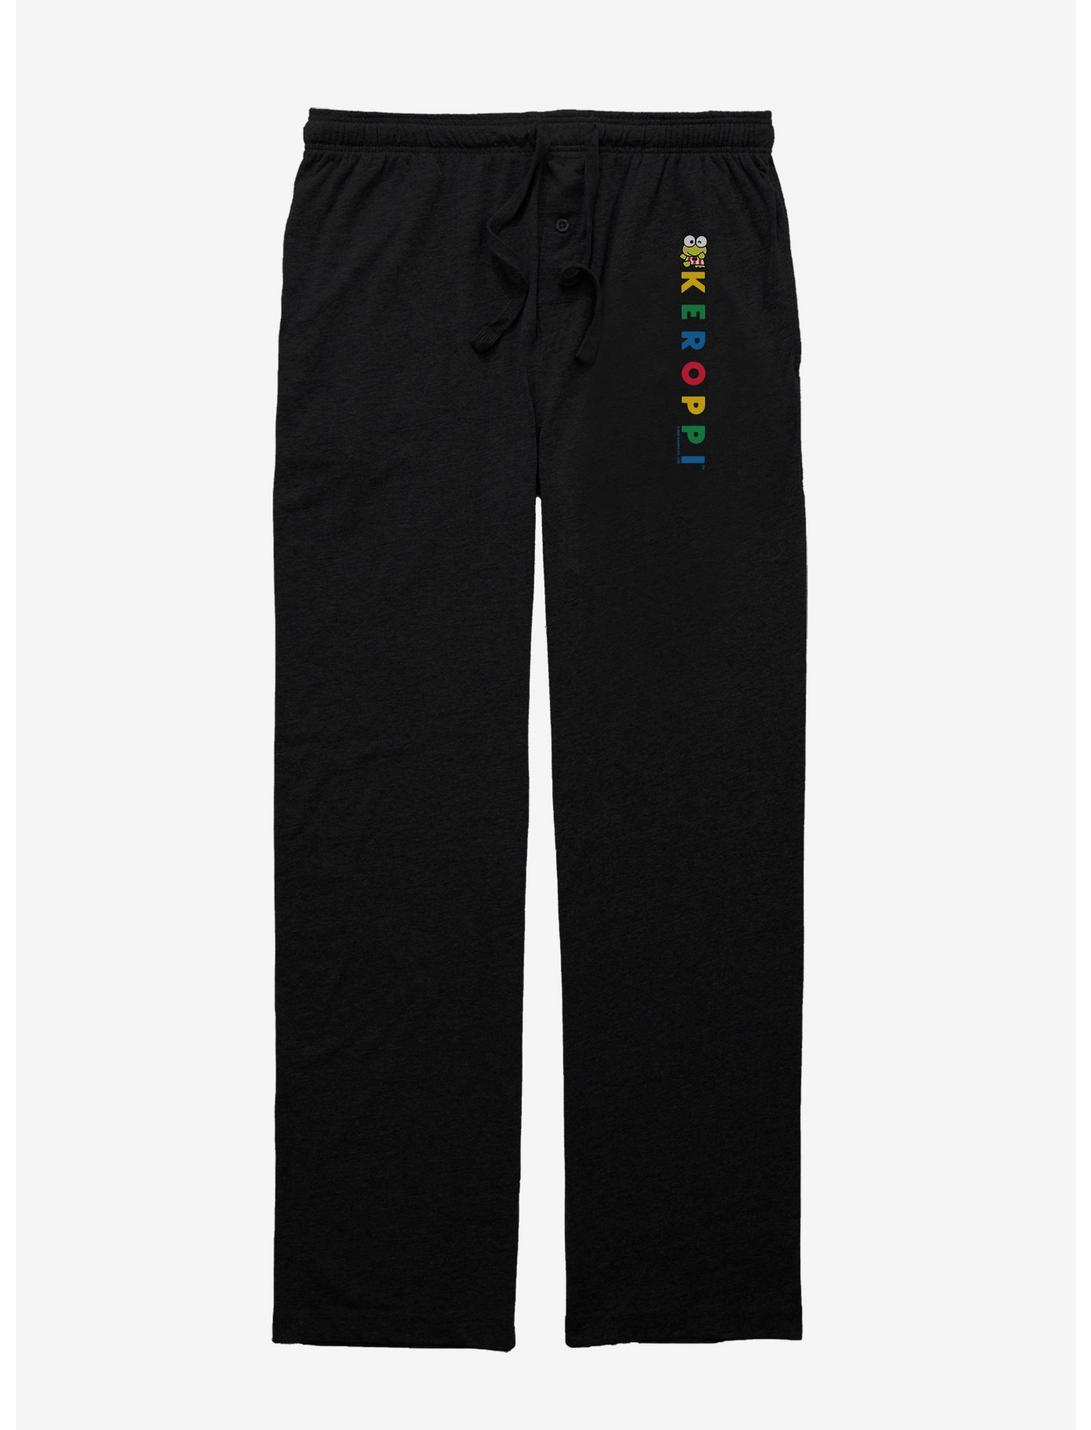 Keroppi Wave And Wink Pajama Pants, BLACK, hi-res